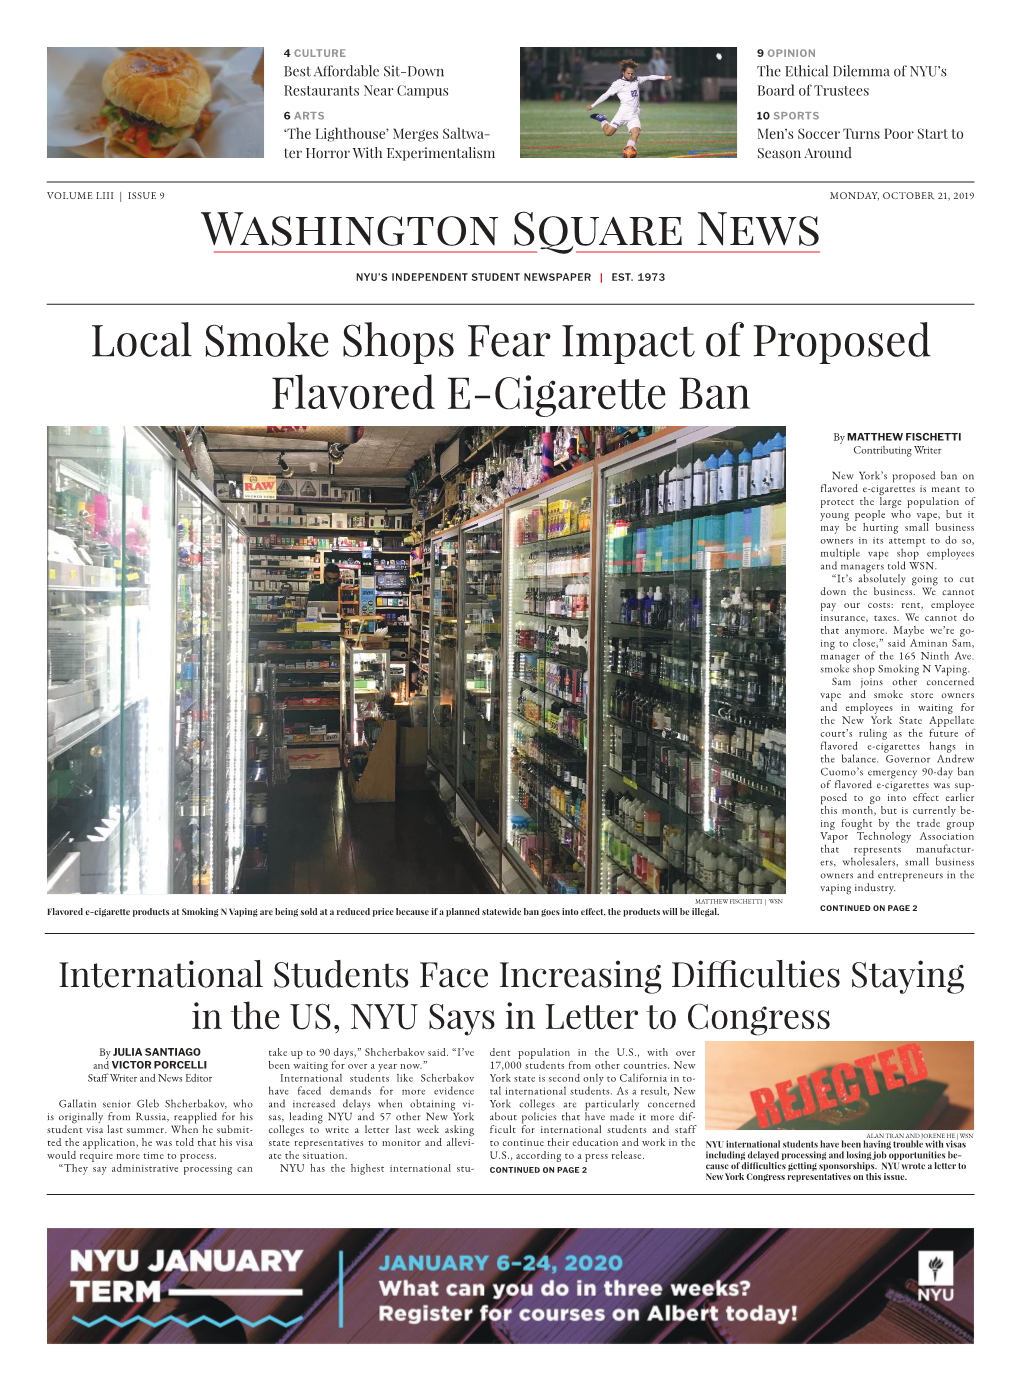 Local Smoke Shops Fear Impact of Proposed Flavored E-Cigarette Ban